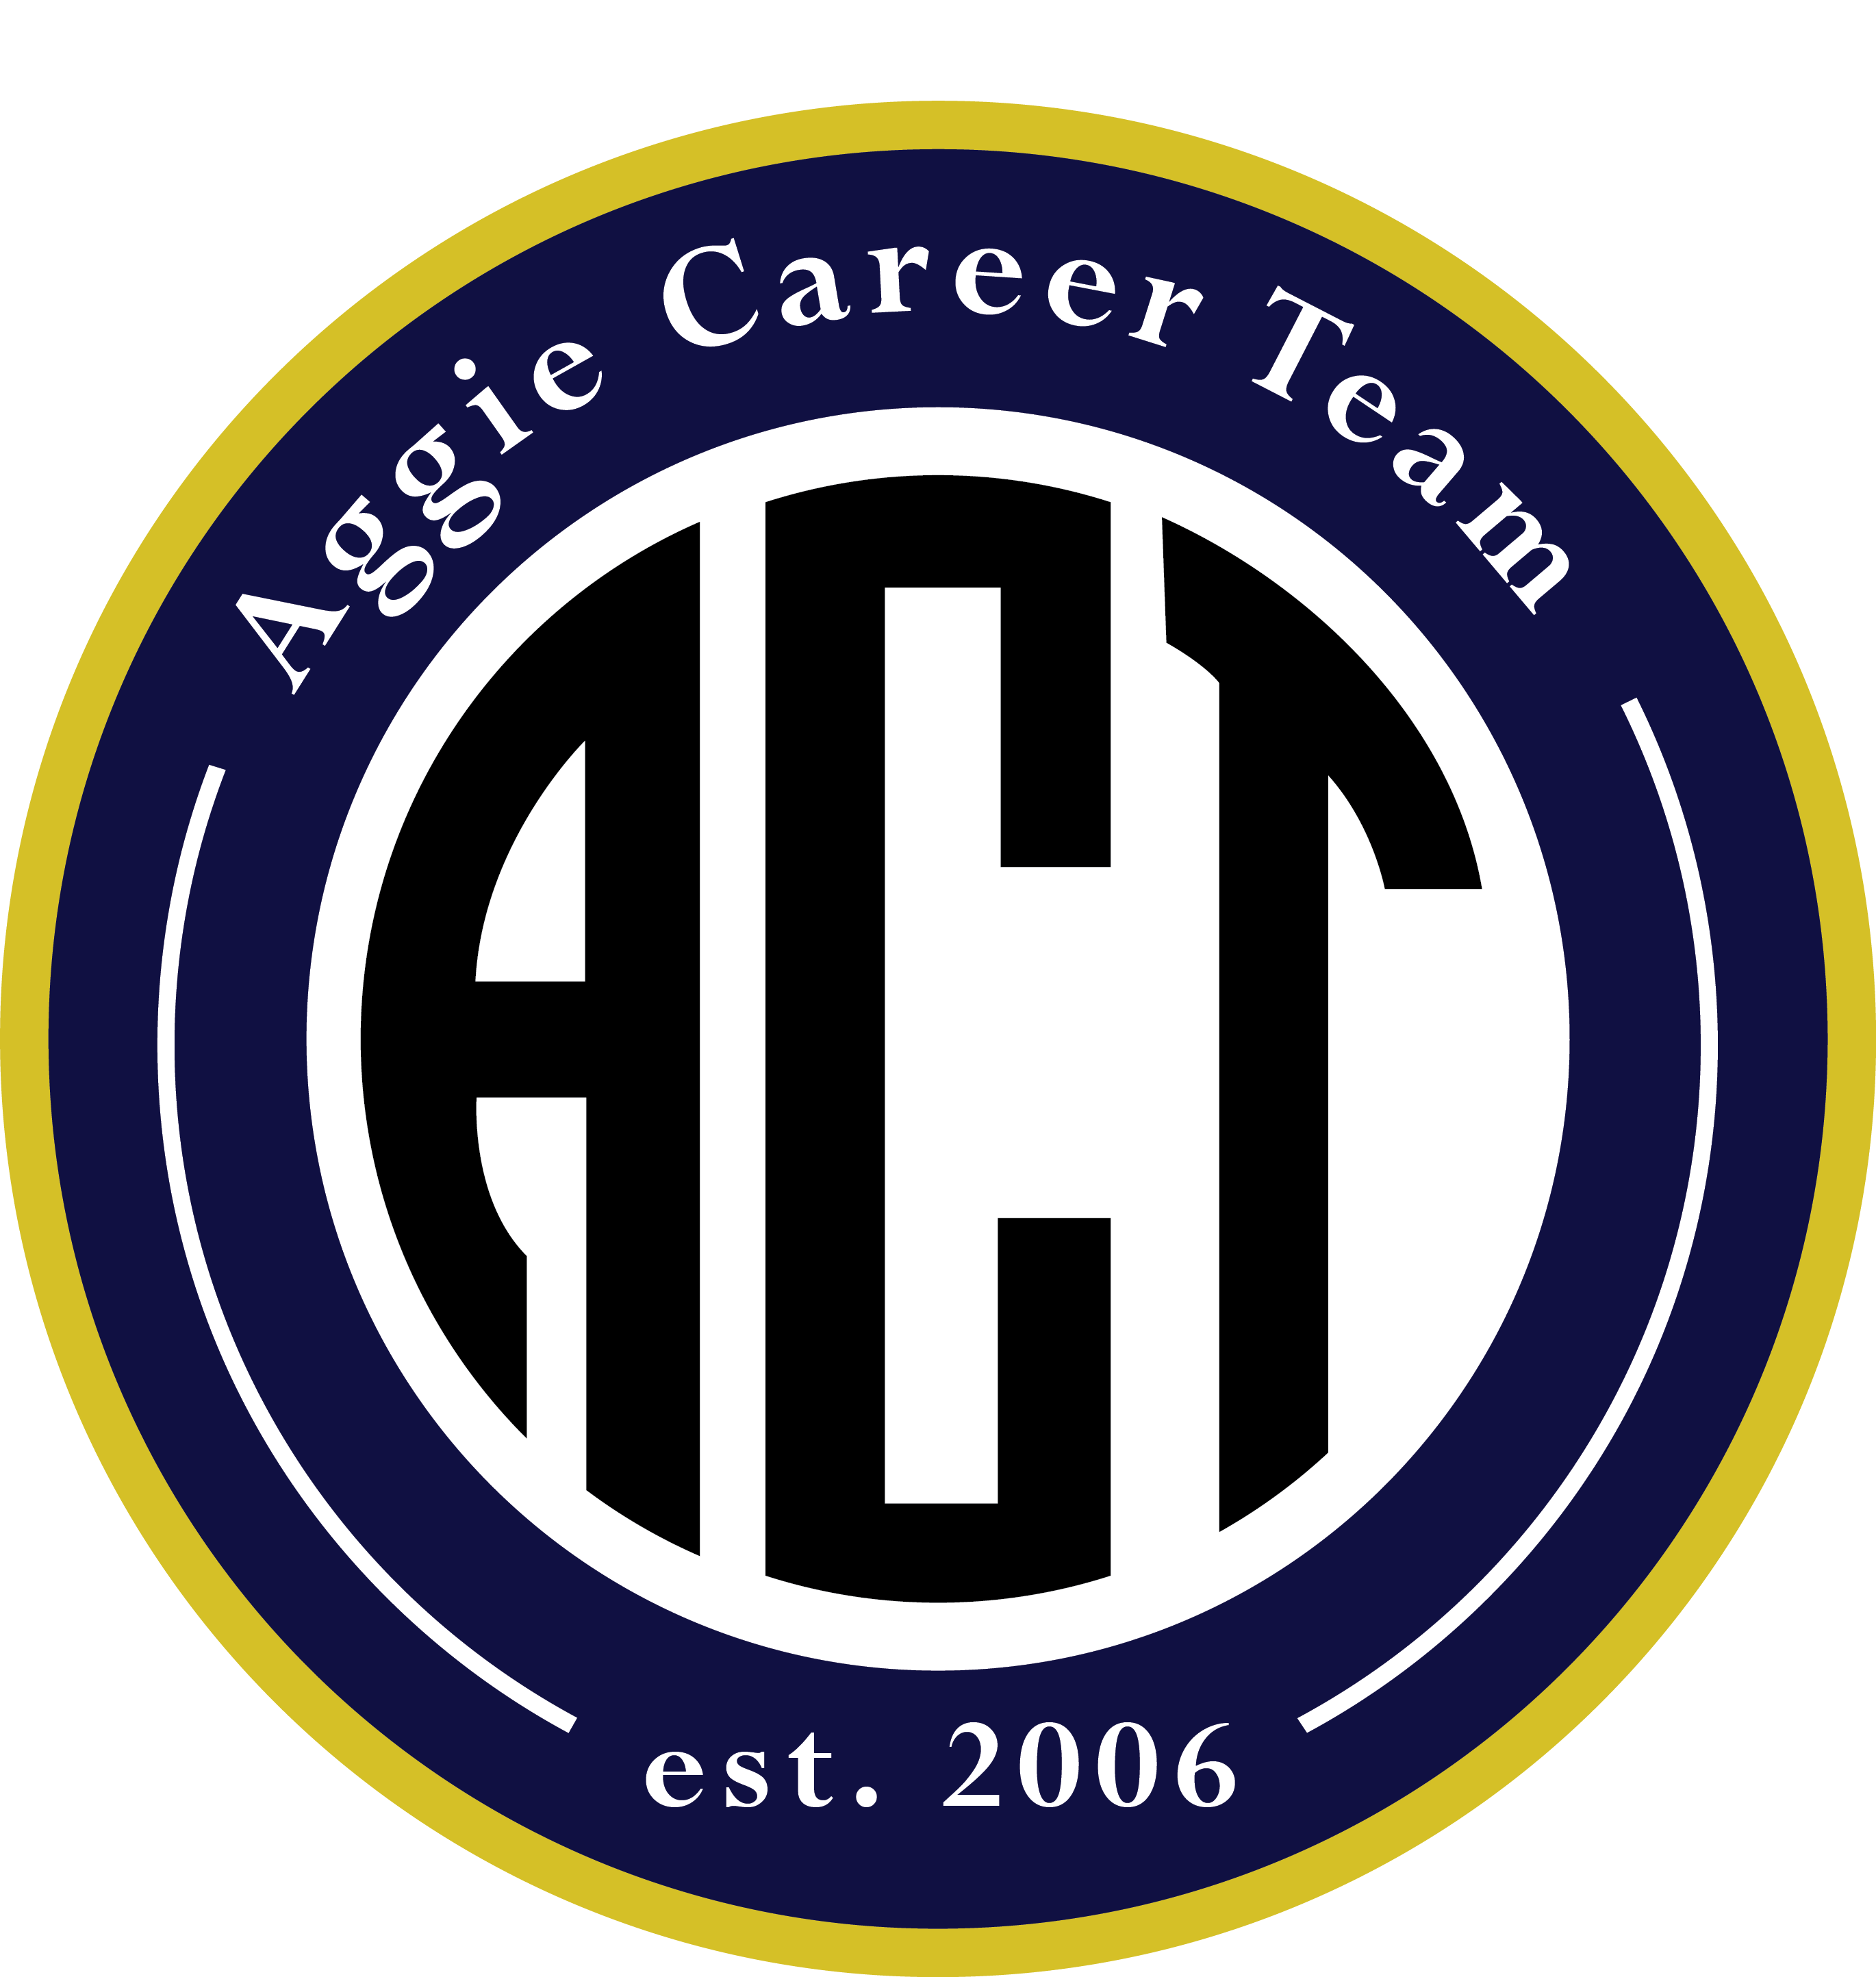 Aggie Career Team Member Dues